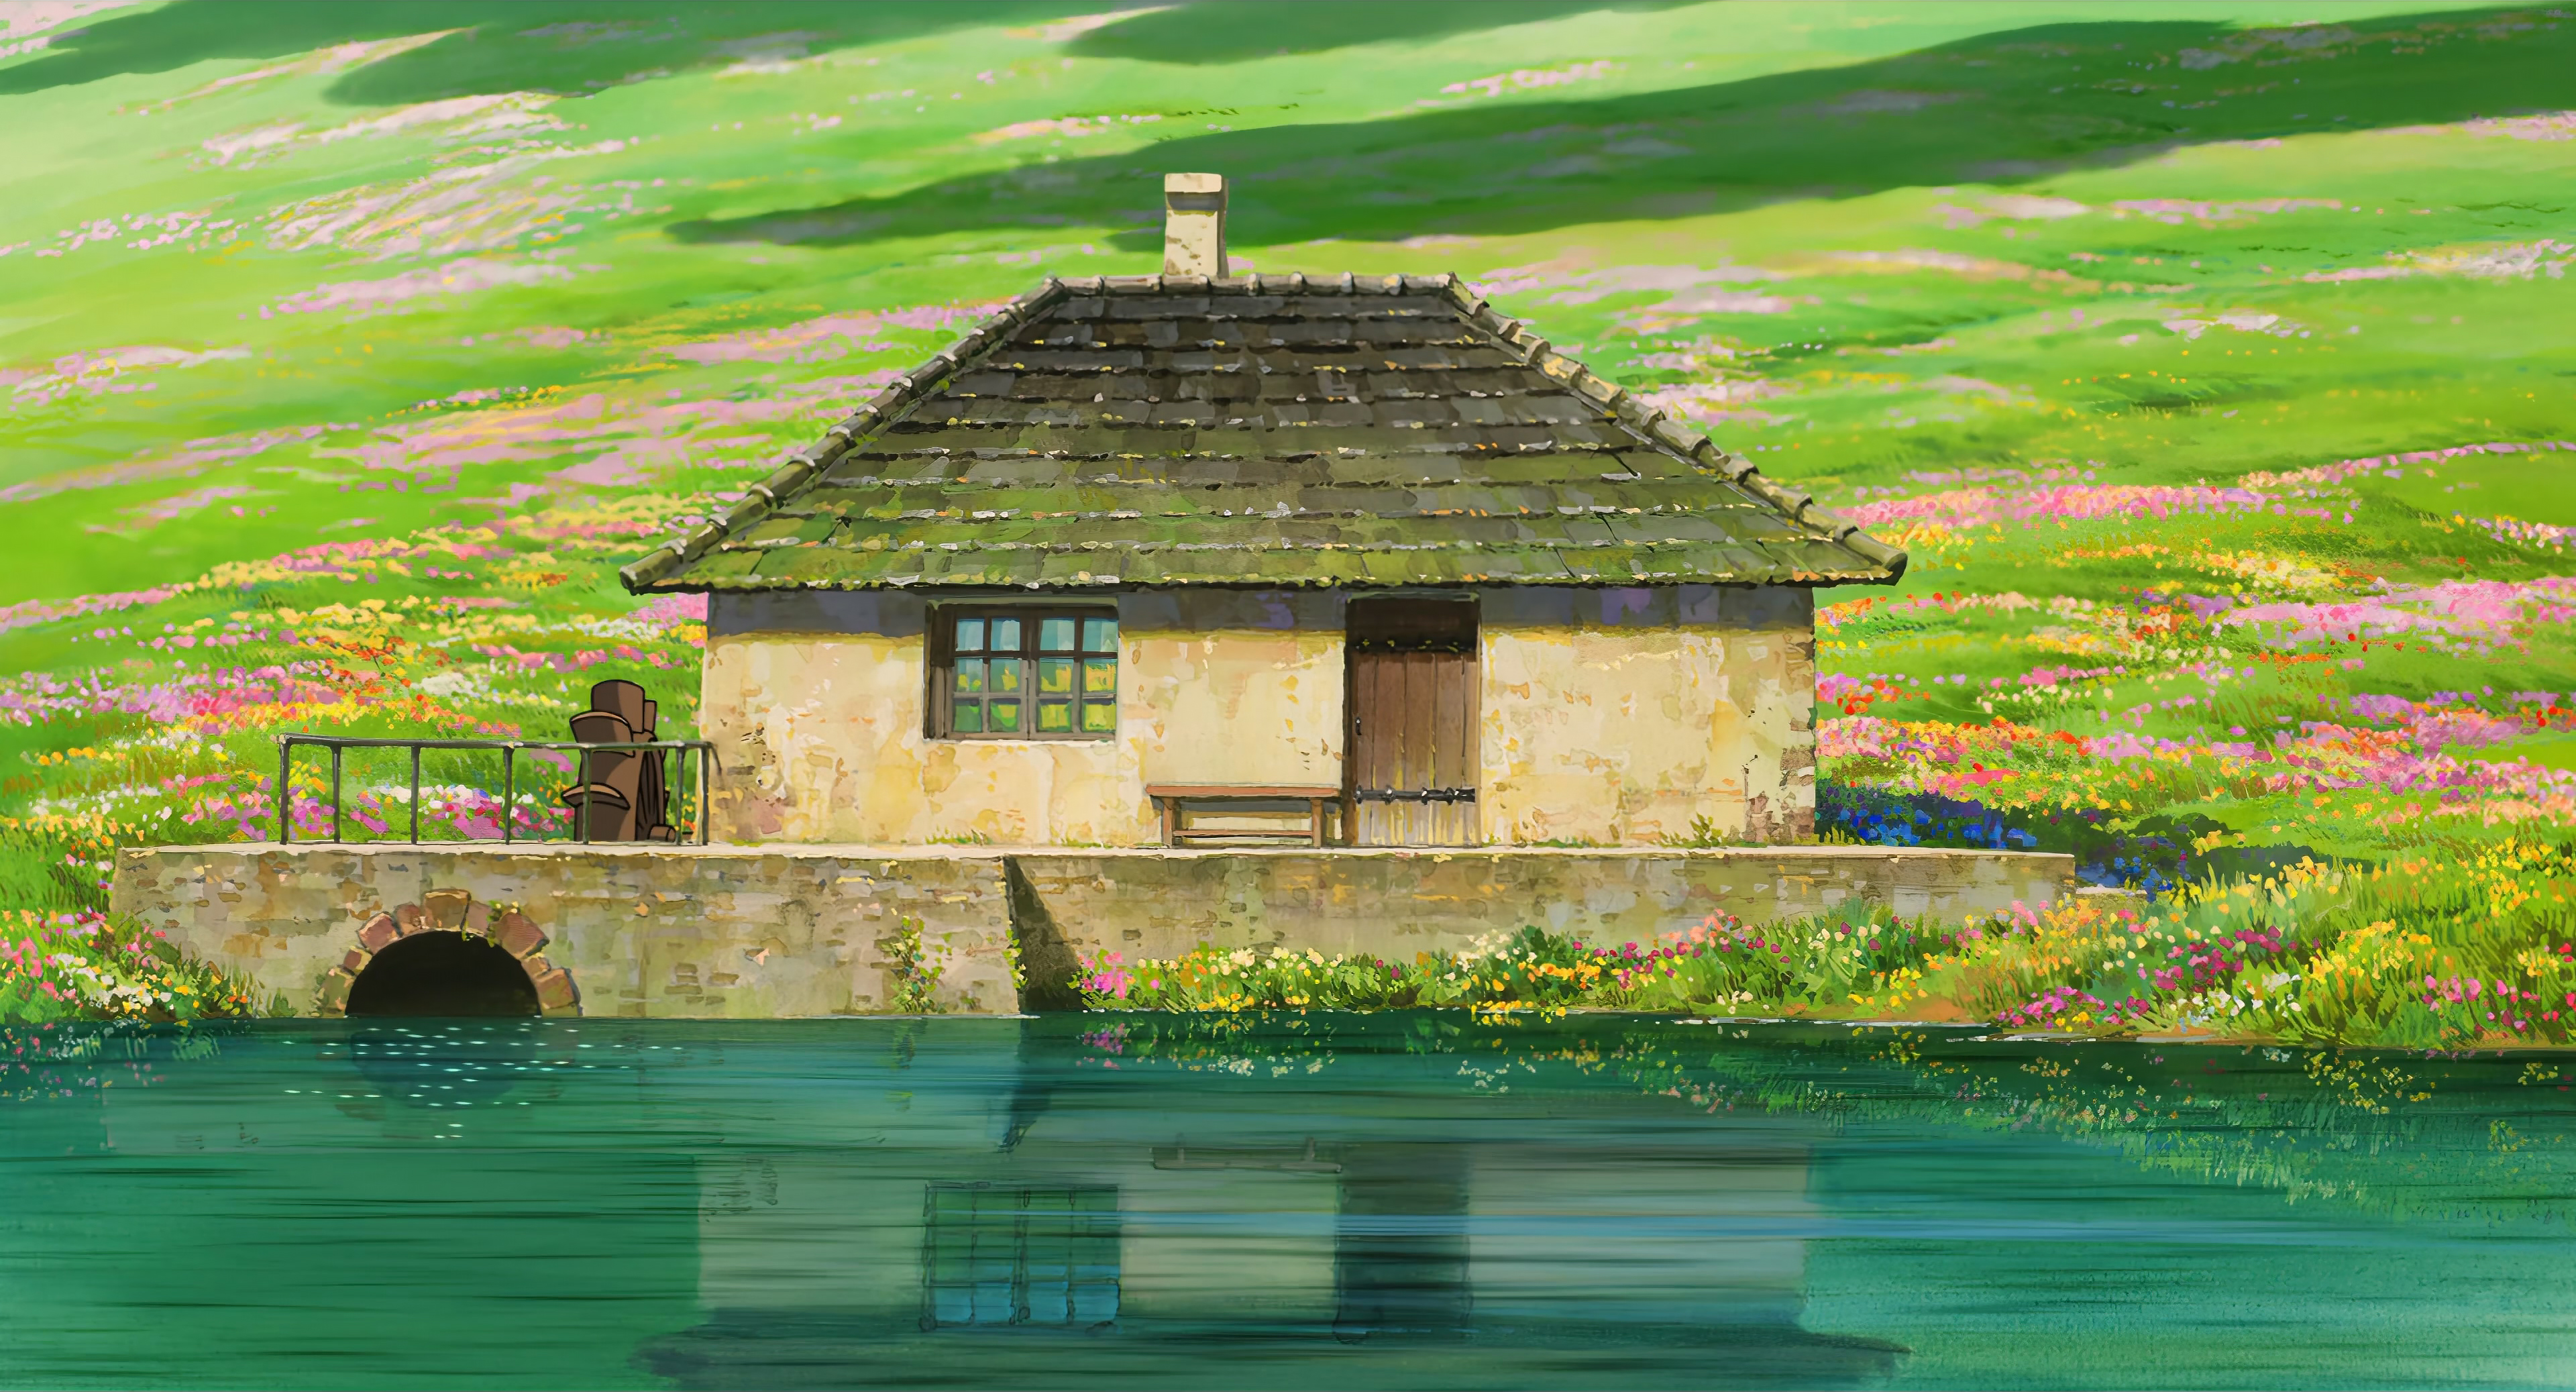 Anime 3840x2075 Howl's Moving Castle Studio Ghibli anime house field plants reflection water door watermills window grass